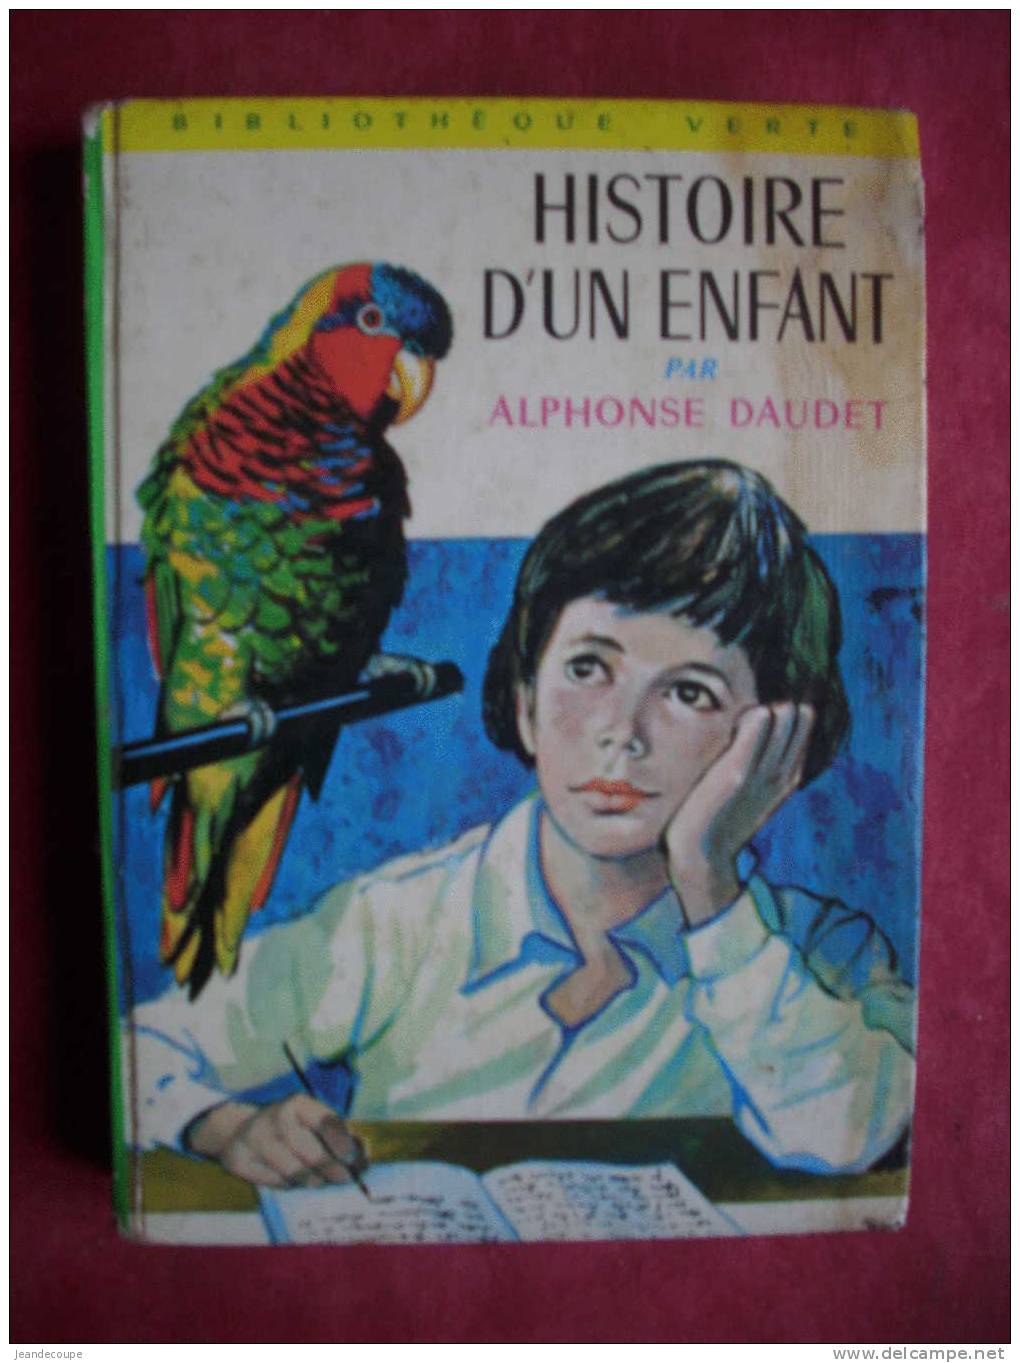 BIBLIOTHEQUE VERTE - Histoire D'un Enfant - Alphonse Daudet - Illustration ( Francois Battet ) 1968 - Biblioteca Verde